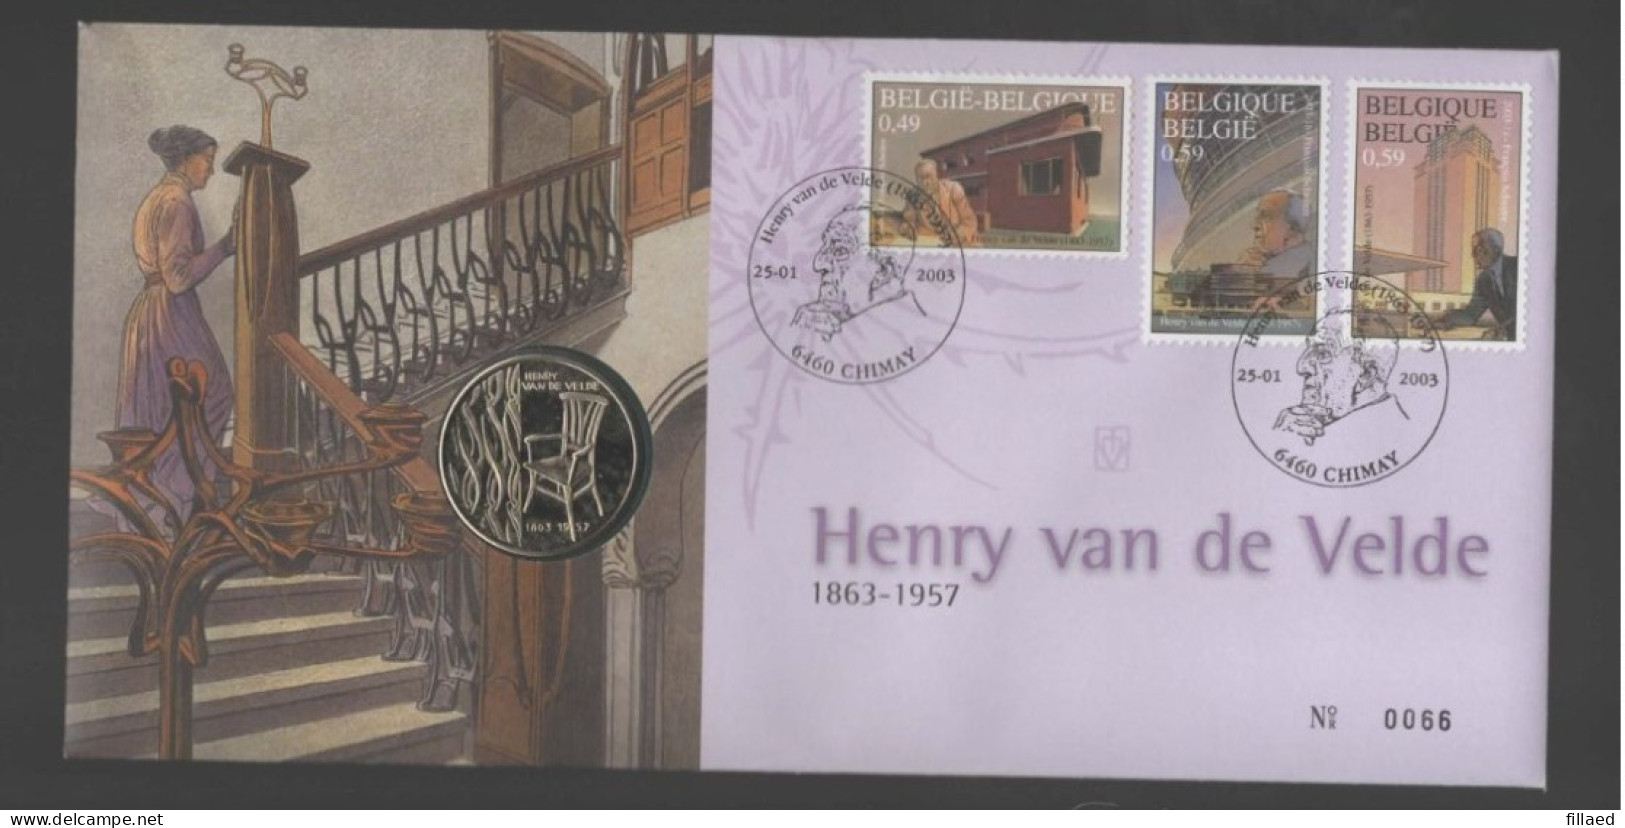 België: Numisletters 3146/48 Henry Van De Velde. - Numisletter